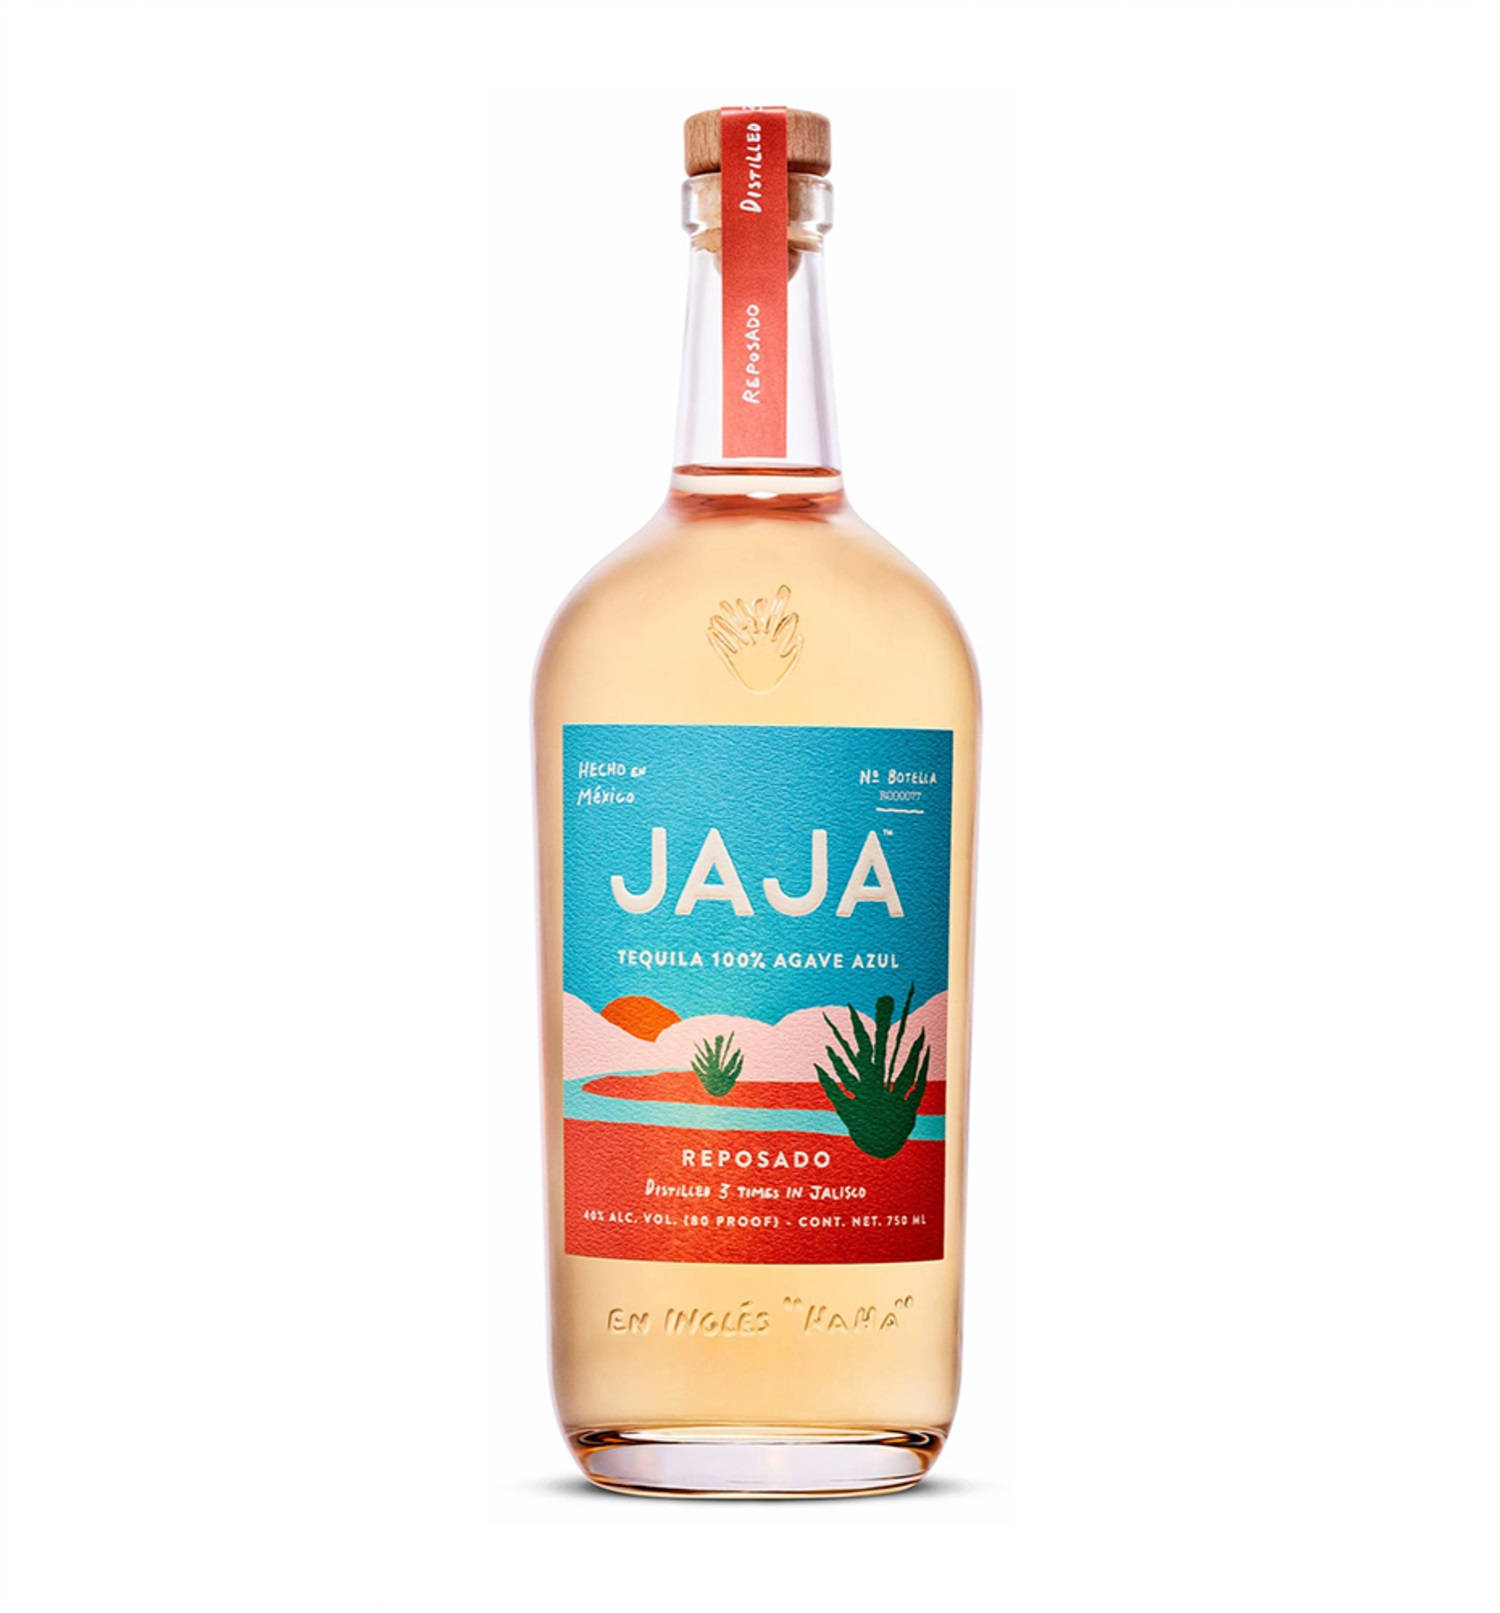 "JAJA Tequila Reposado Bottle - Premium Quality Spirit" Wallpaper